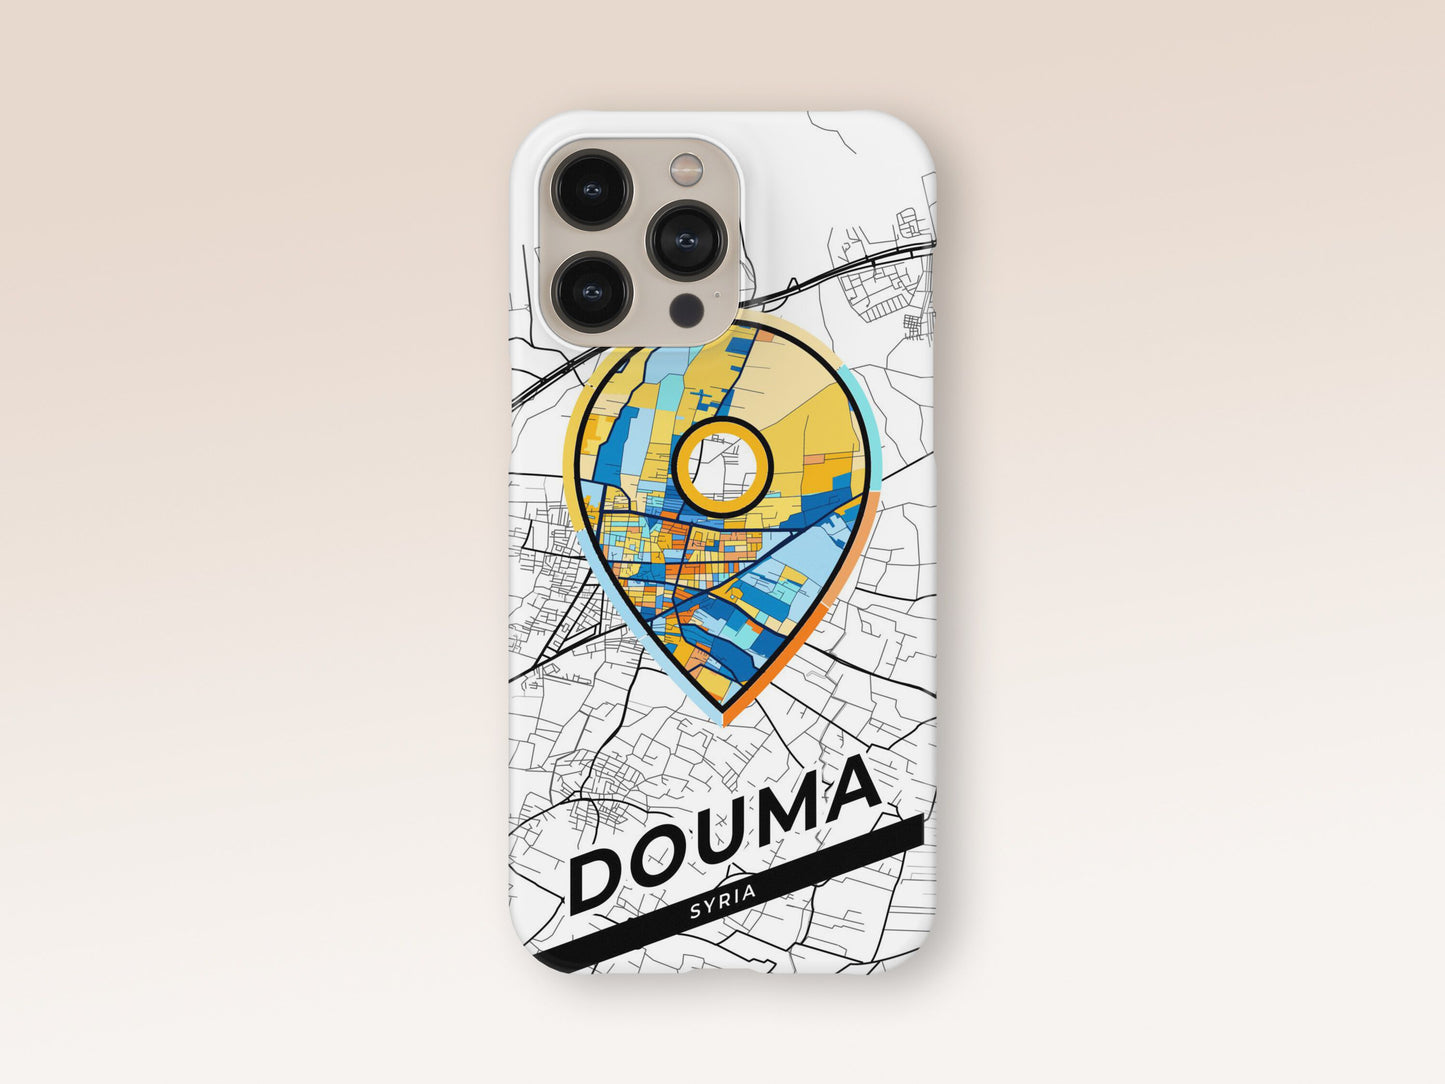 Douma Syria slim phone case with colorful icon. Birthday, wedding or housewarming gift. Couple match cases. 1